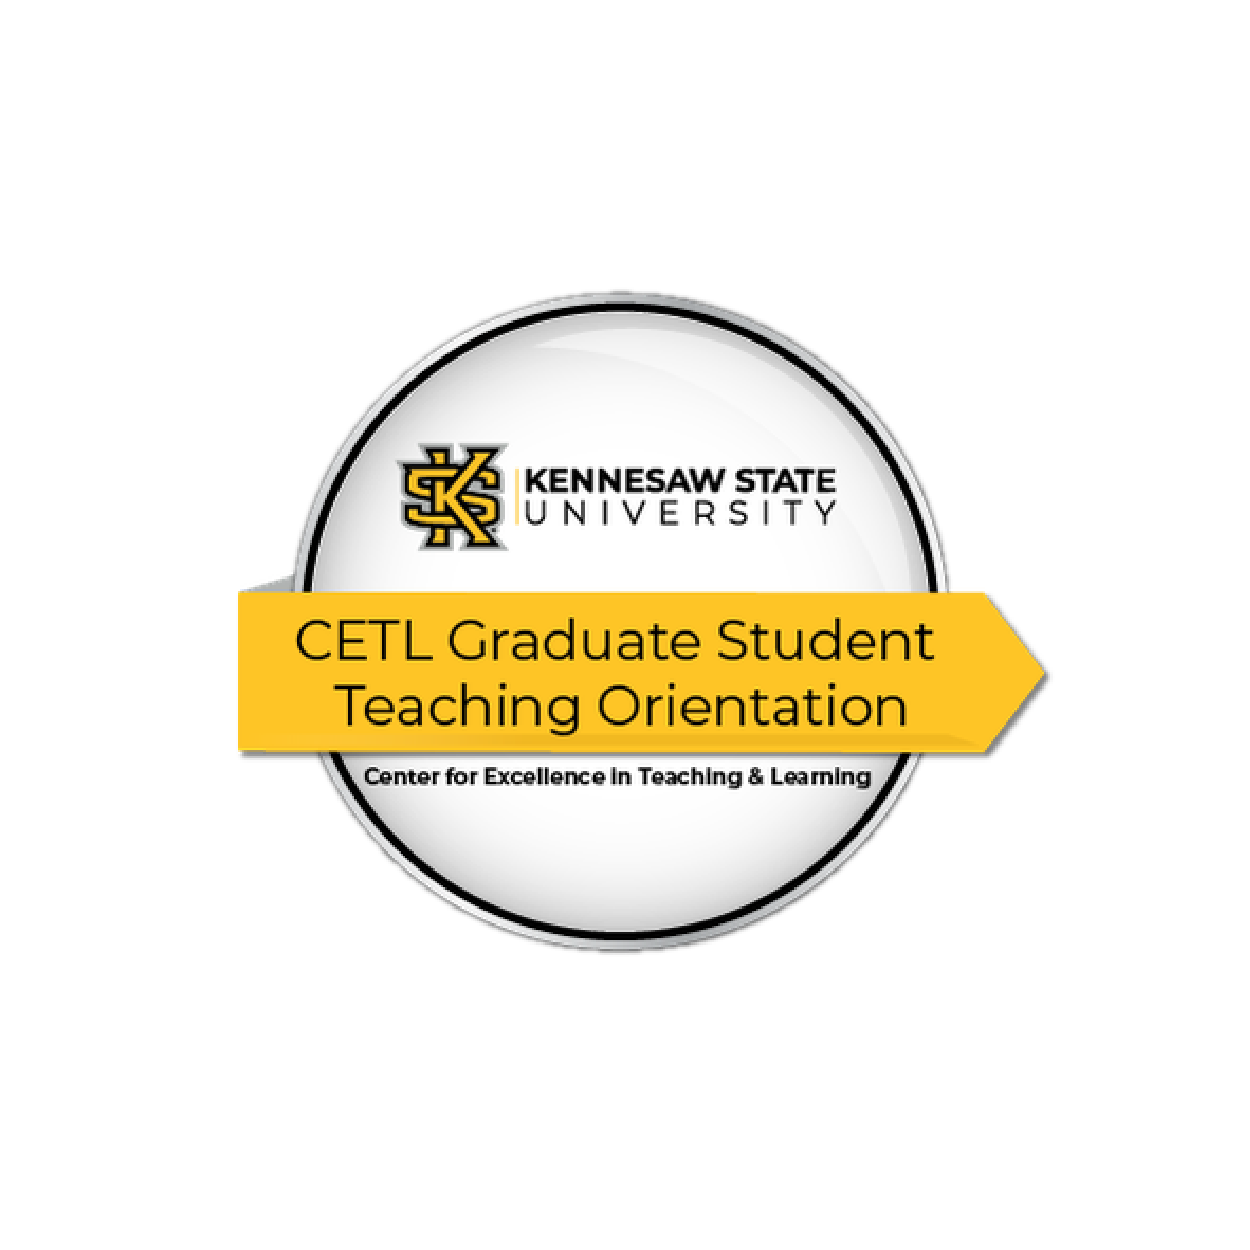 CETL Graduate Student Teaching Orientation